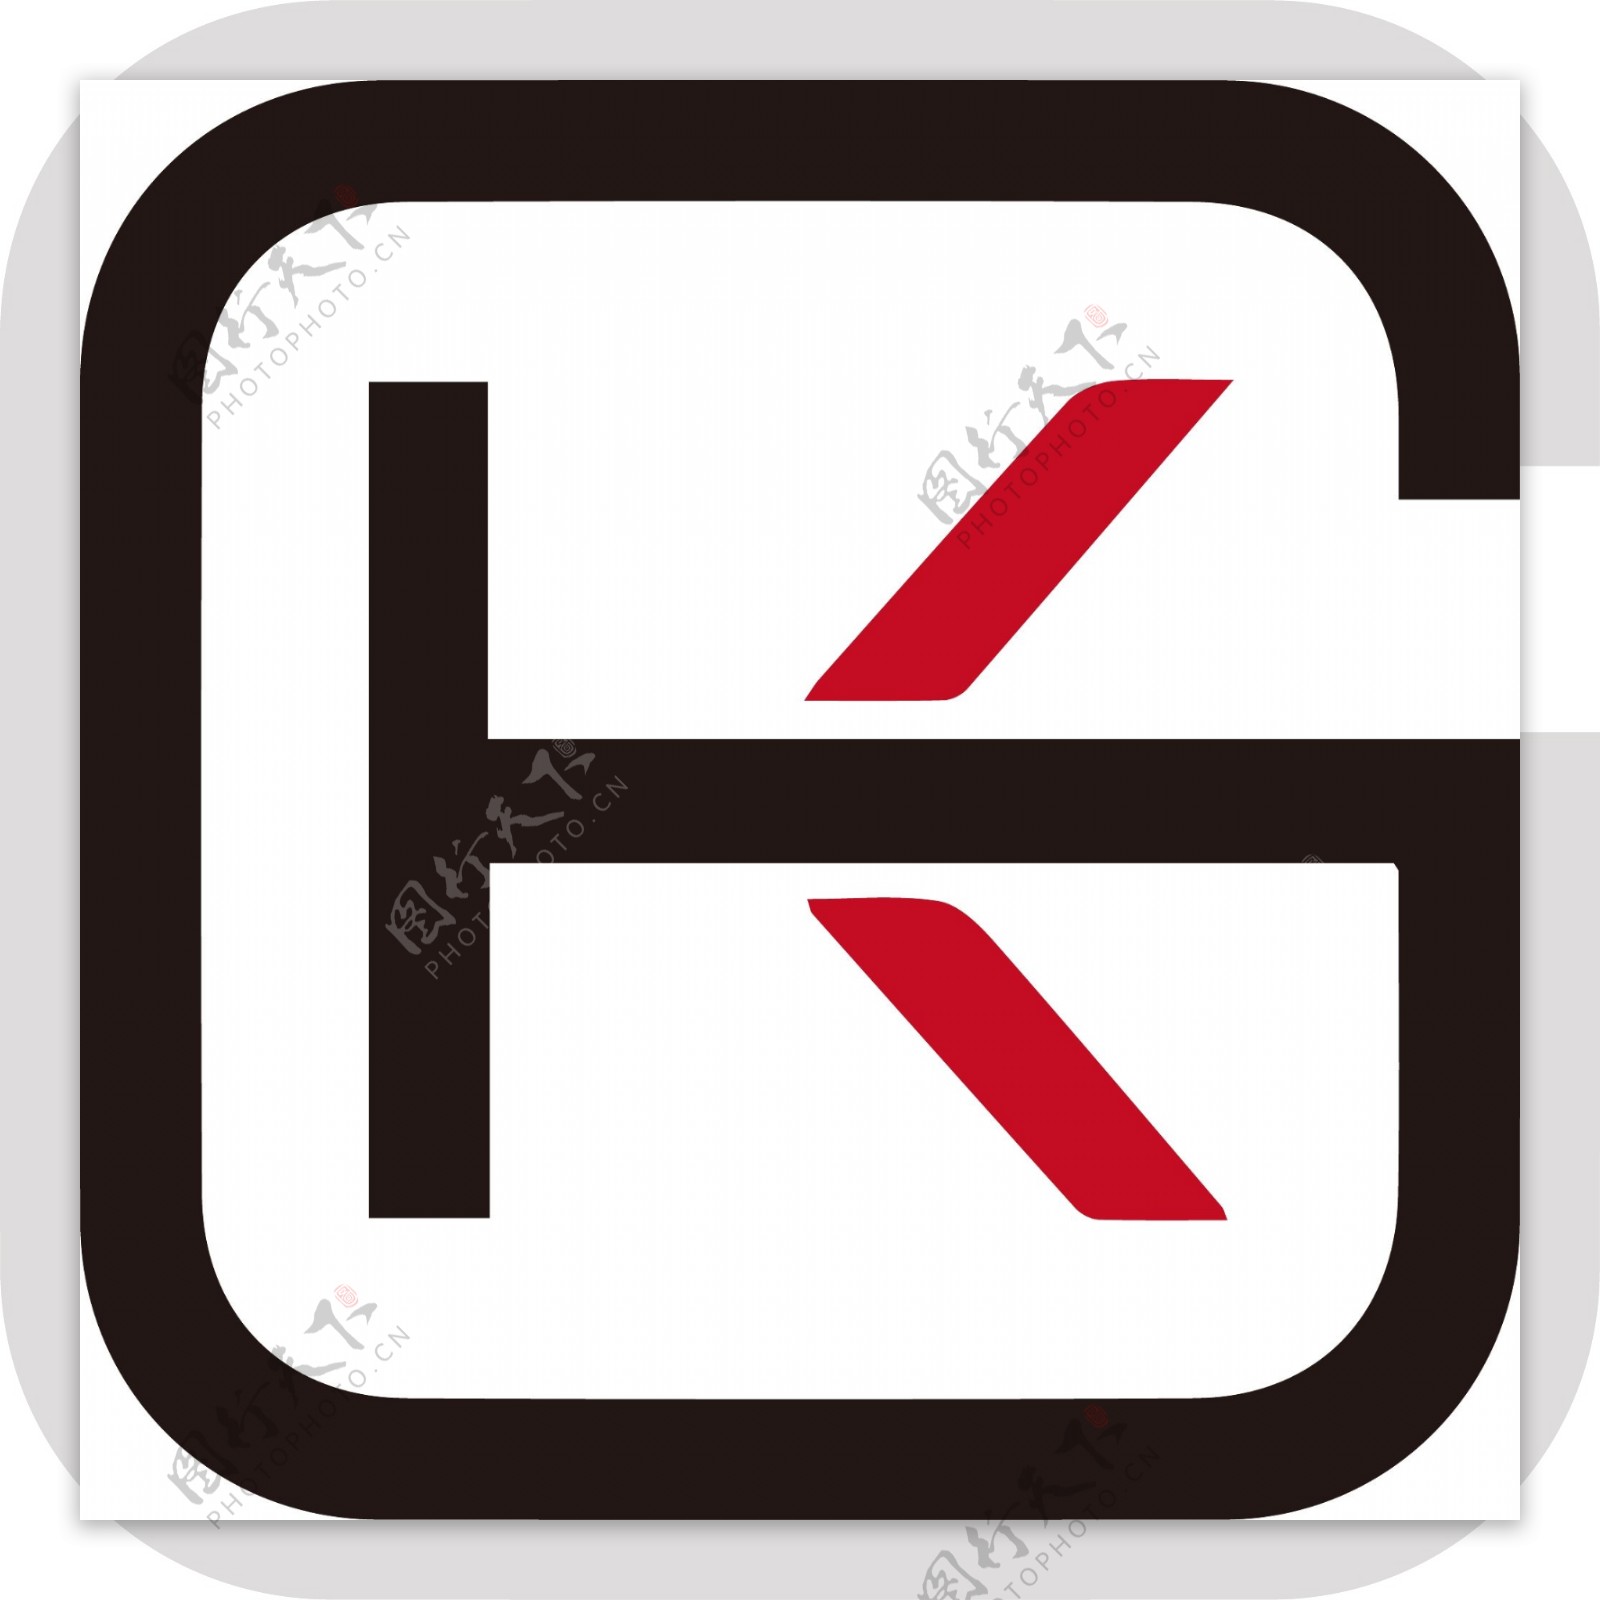 KG开头的logo